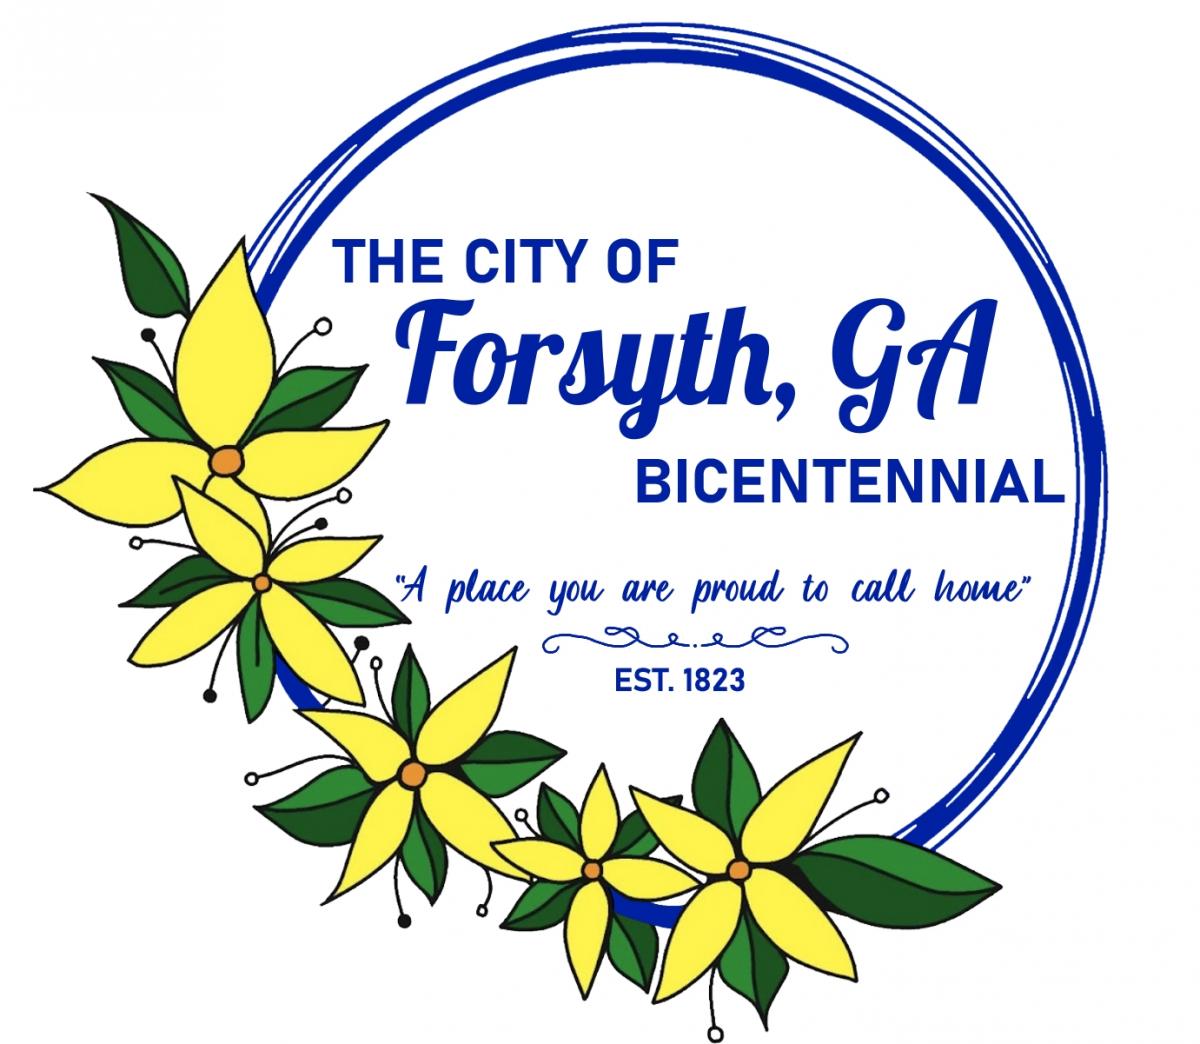 City of Forsyth Bicentennial cover image